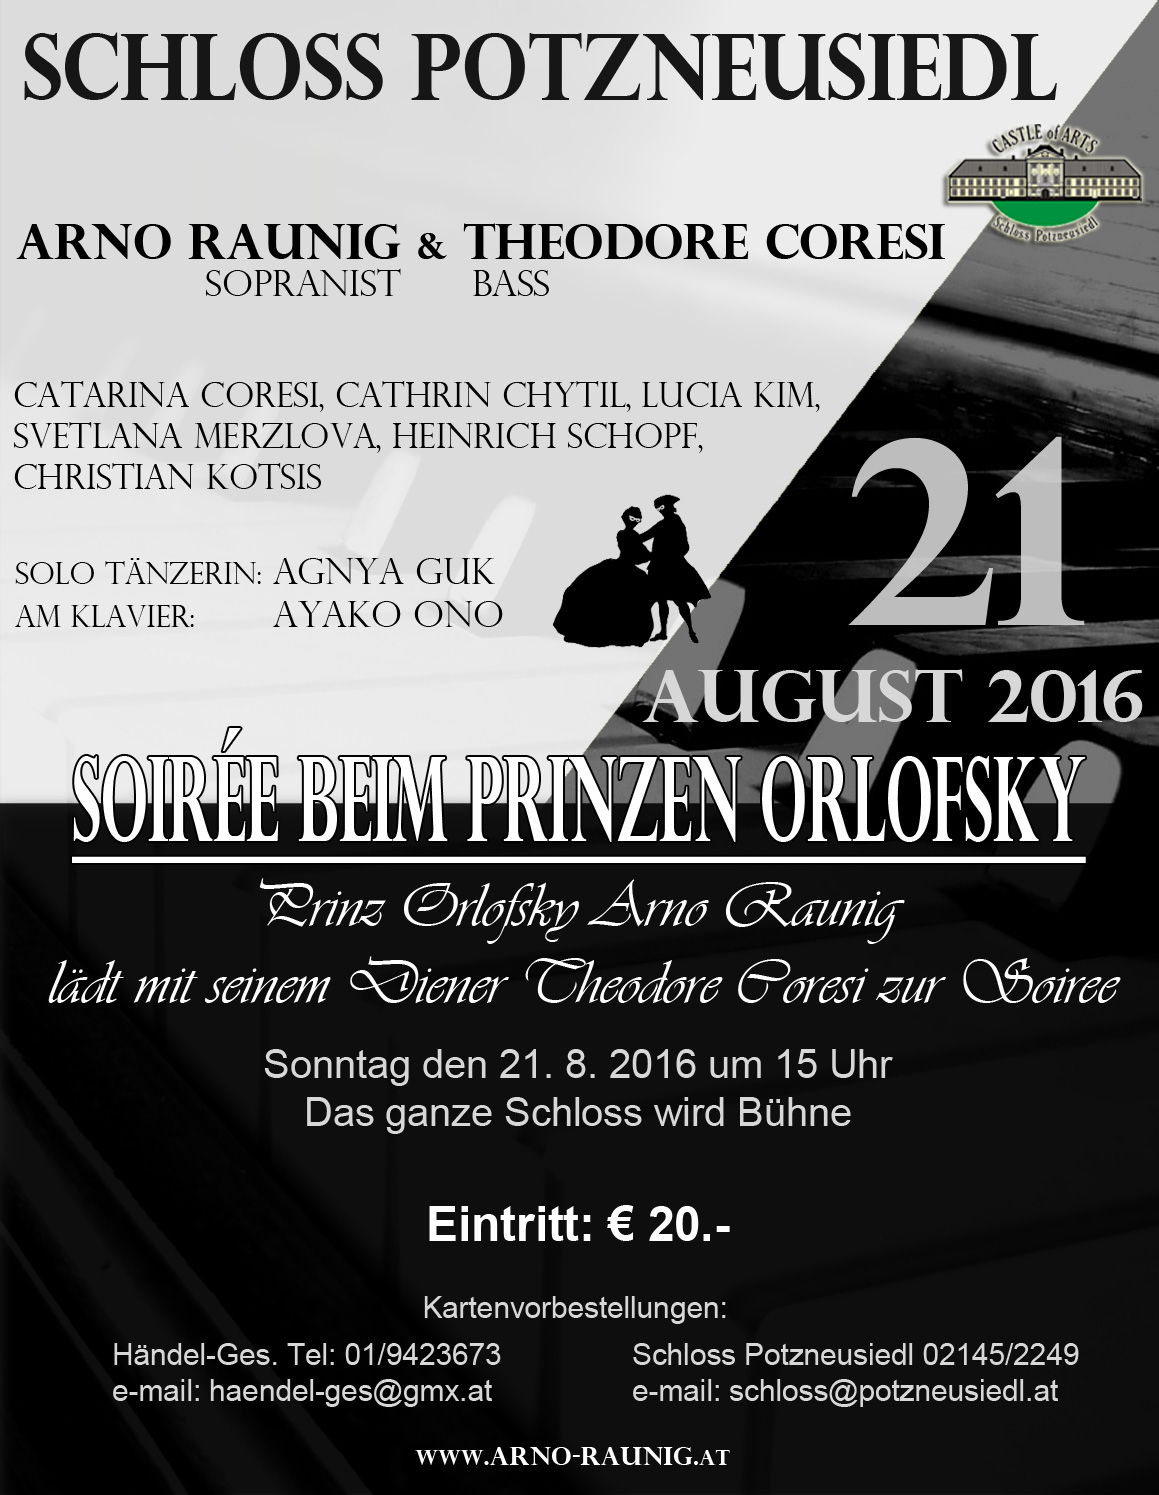 Konzert: Soiree Beim Prinzen Orlofsky 21.8.2016 in Wien